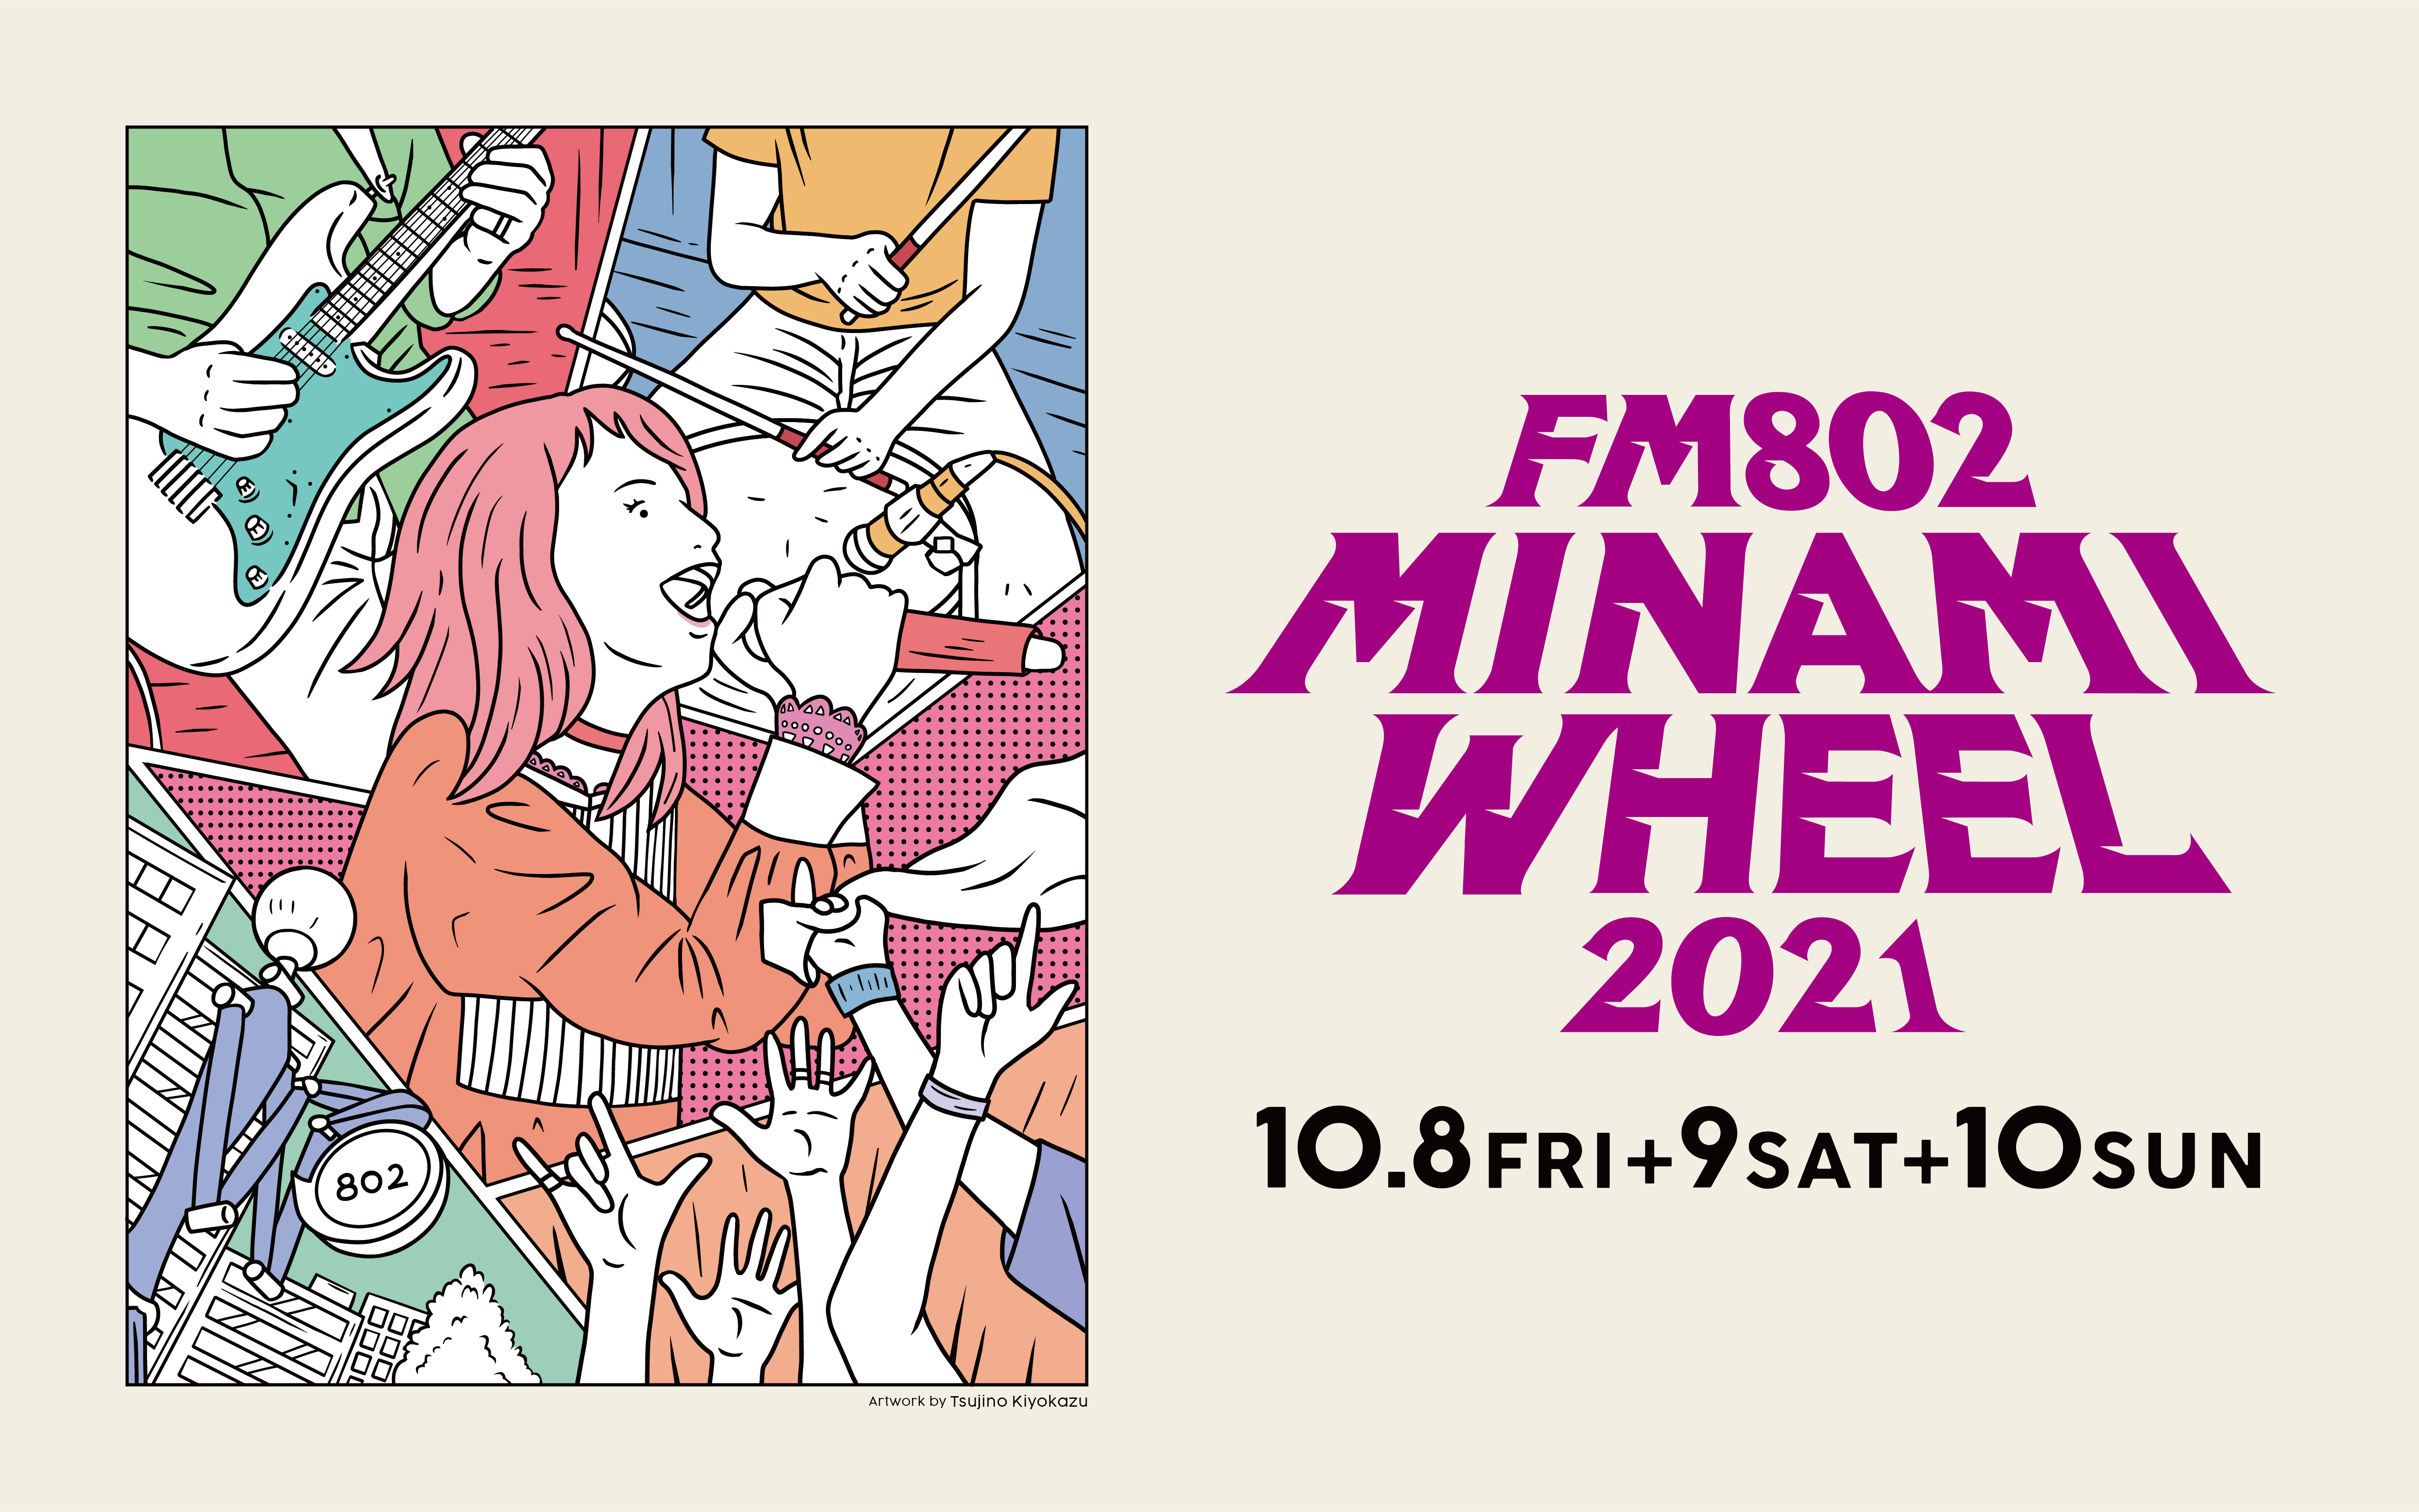 FM802 MINAMI WHEEL 2021